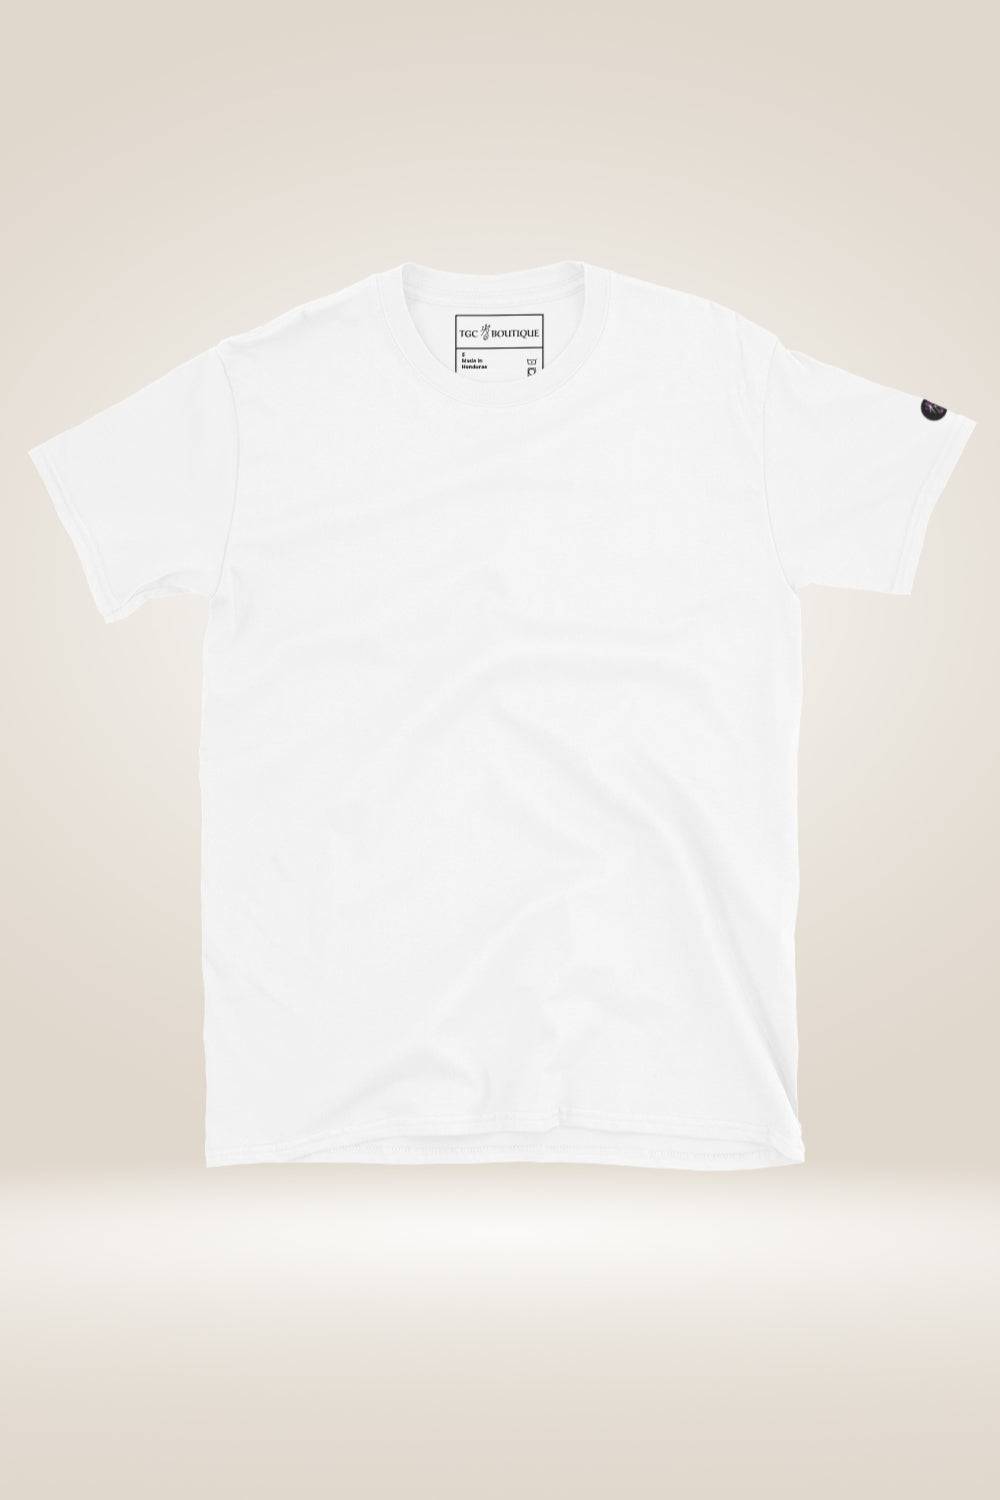 Short Sleeve "Do It Now" White T Shirt - TGC Boutique - T Shirt